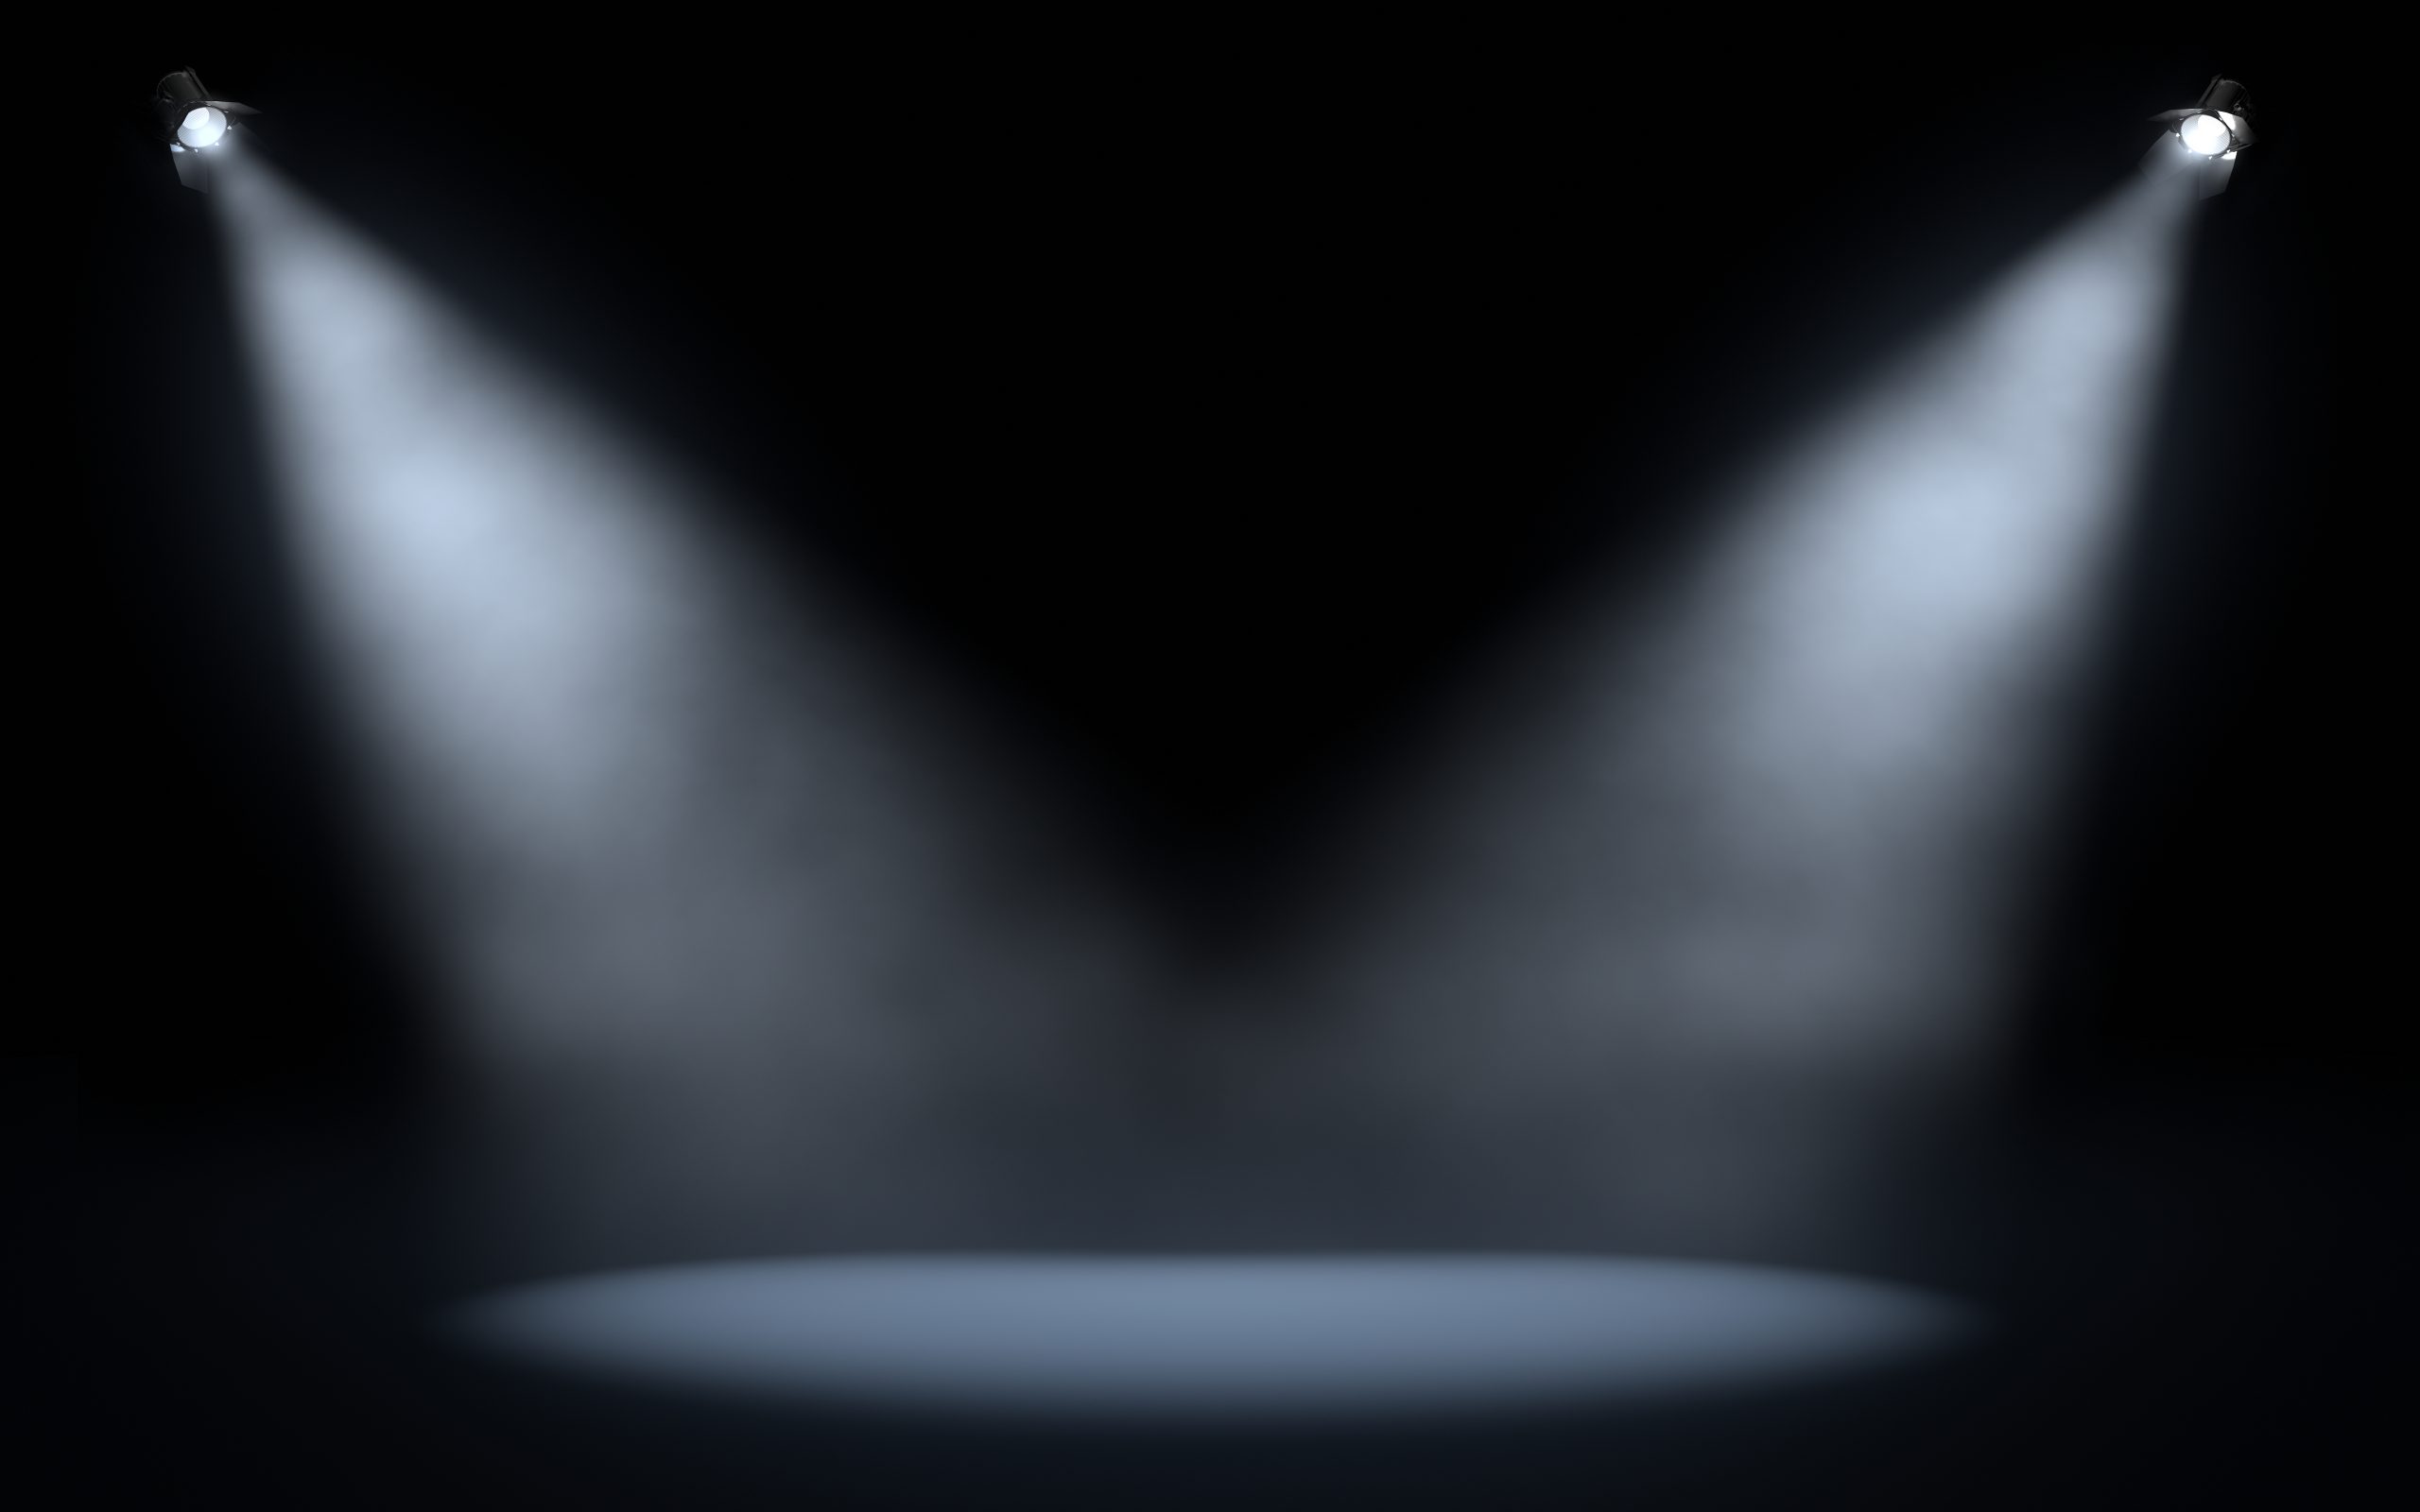 https://depositphotos.com/26568791/stock-photo-stage-spotlights.html